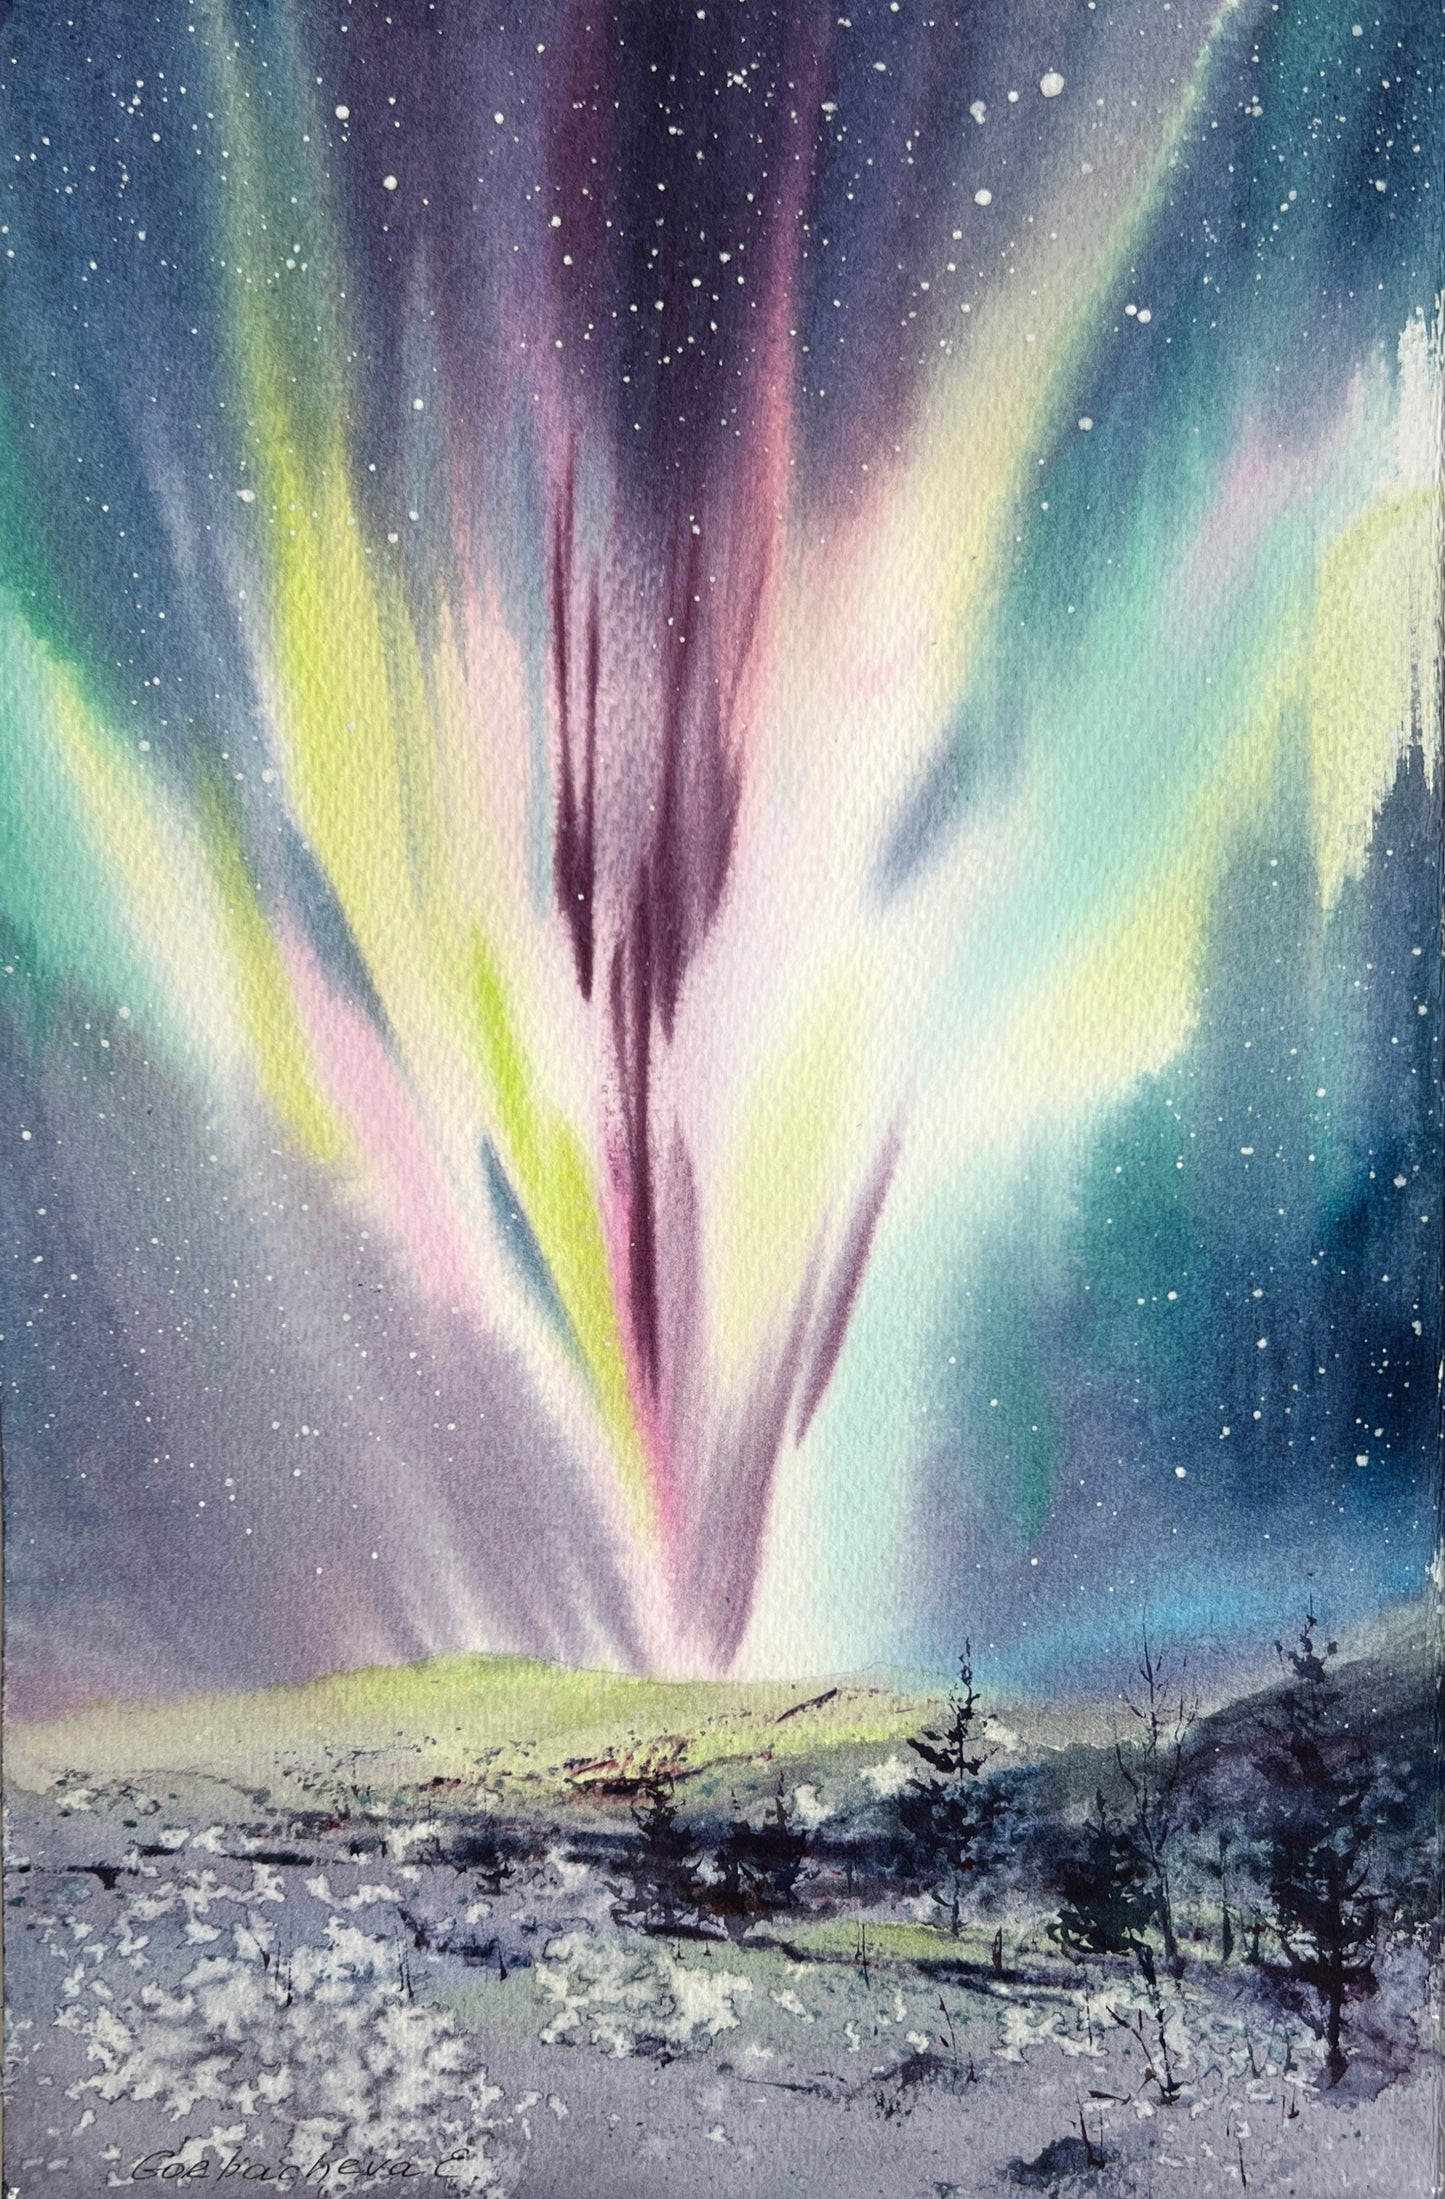 Aurora Borealis Painting Original Watercolor, Northern lights, Winter Landscape, Nordic Wall Art, Christmas Gift